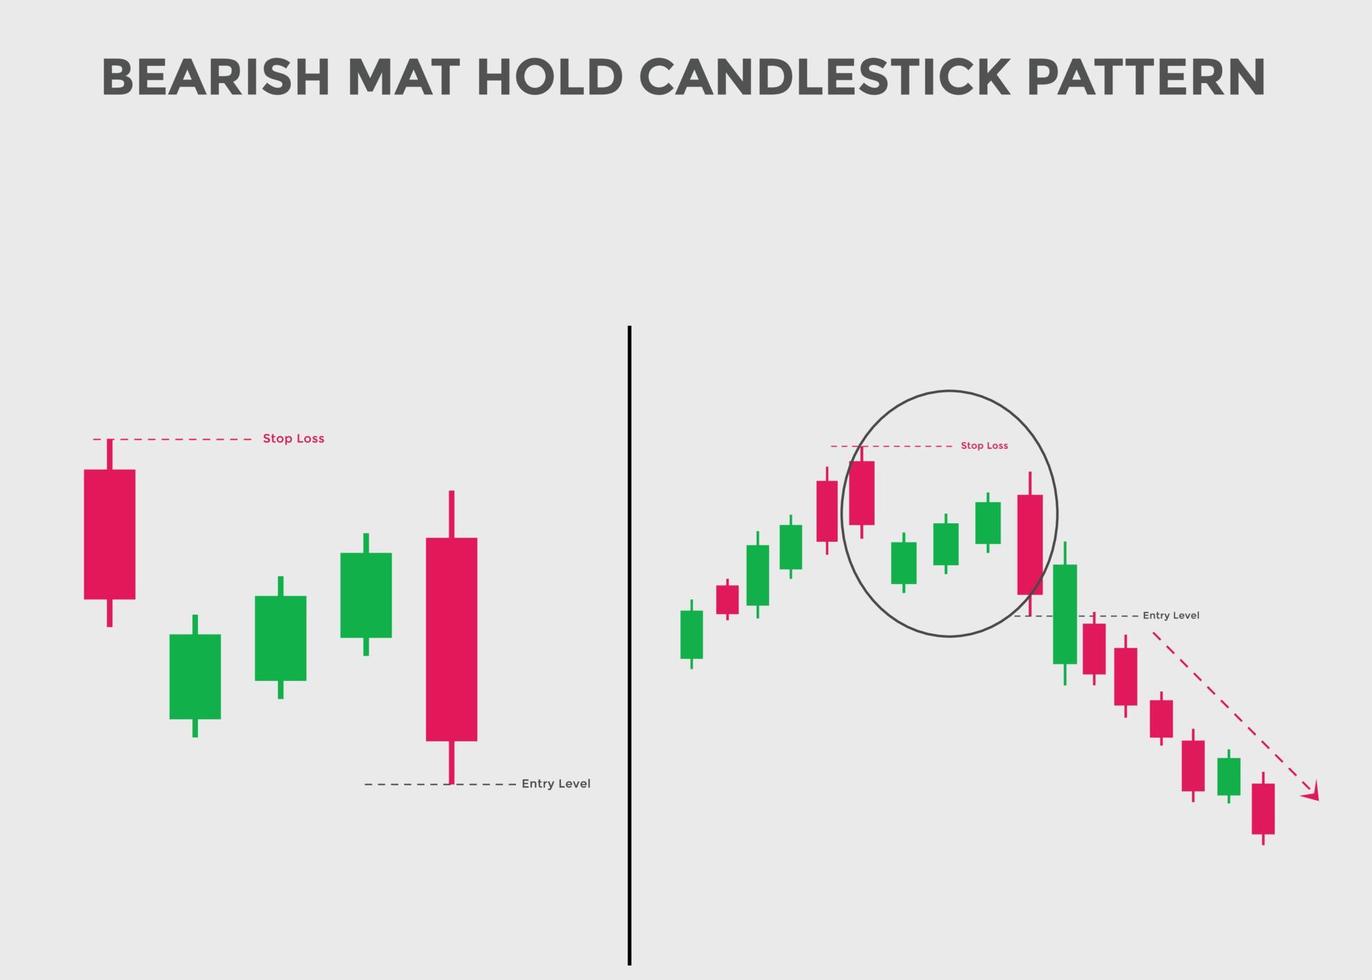 bearish mat hold candlestick patterns. Candlestick chart Pattern For Traders. Powerful bearish Candlestick chart for forex, stock, cryptocurrency. japanese candlesticks pattern vector